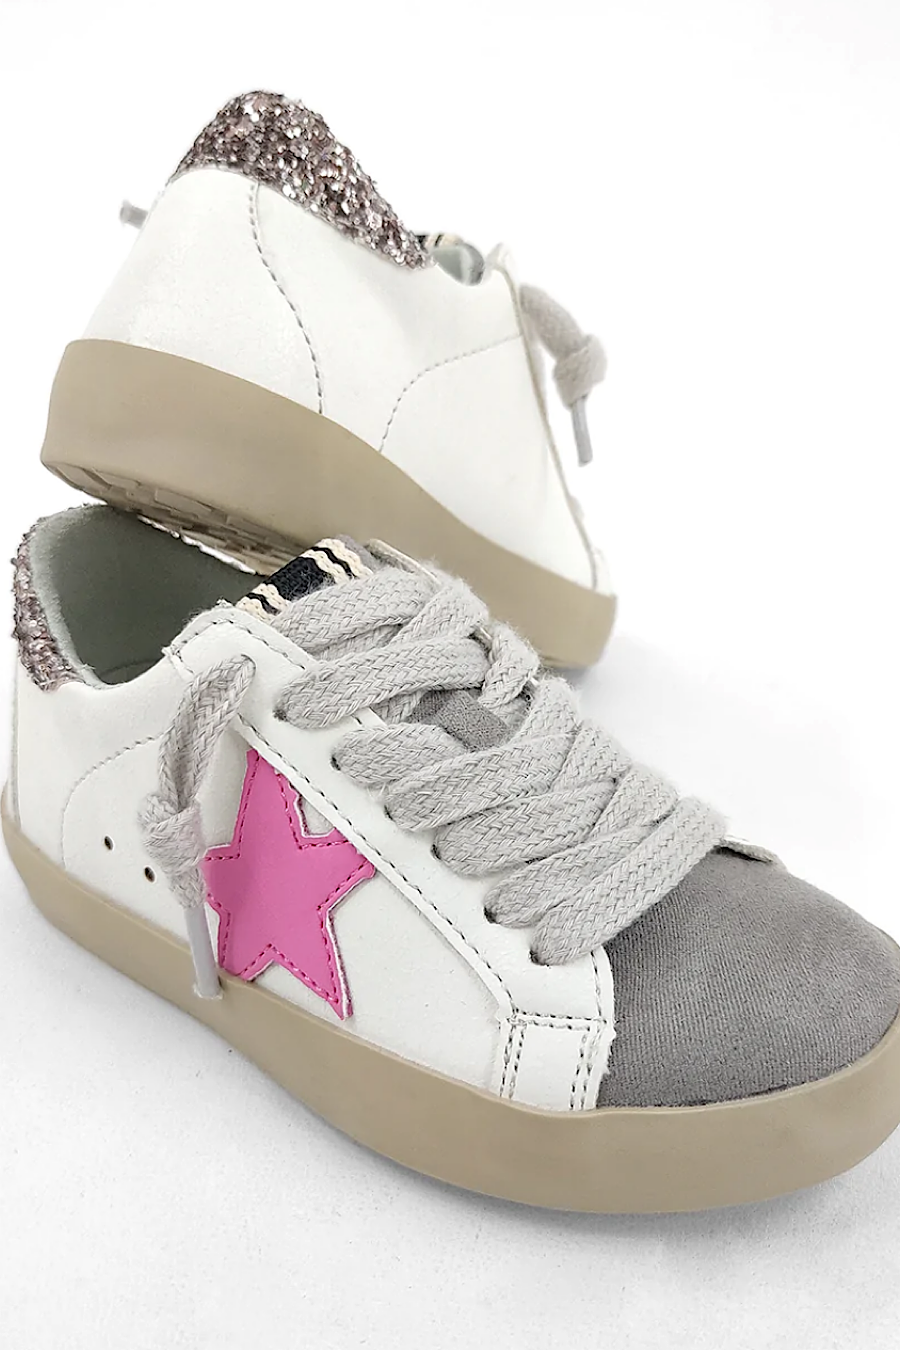 Toddler Paris Sneakers in Grey & Pink